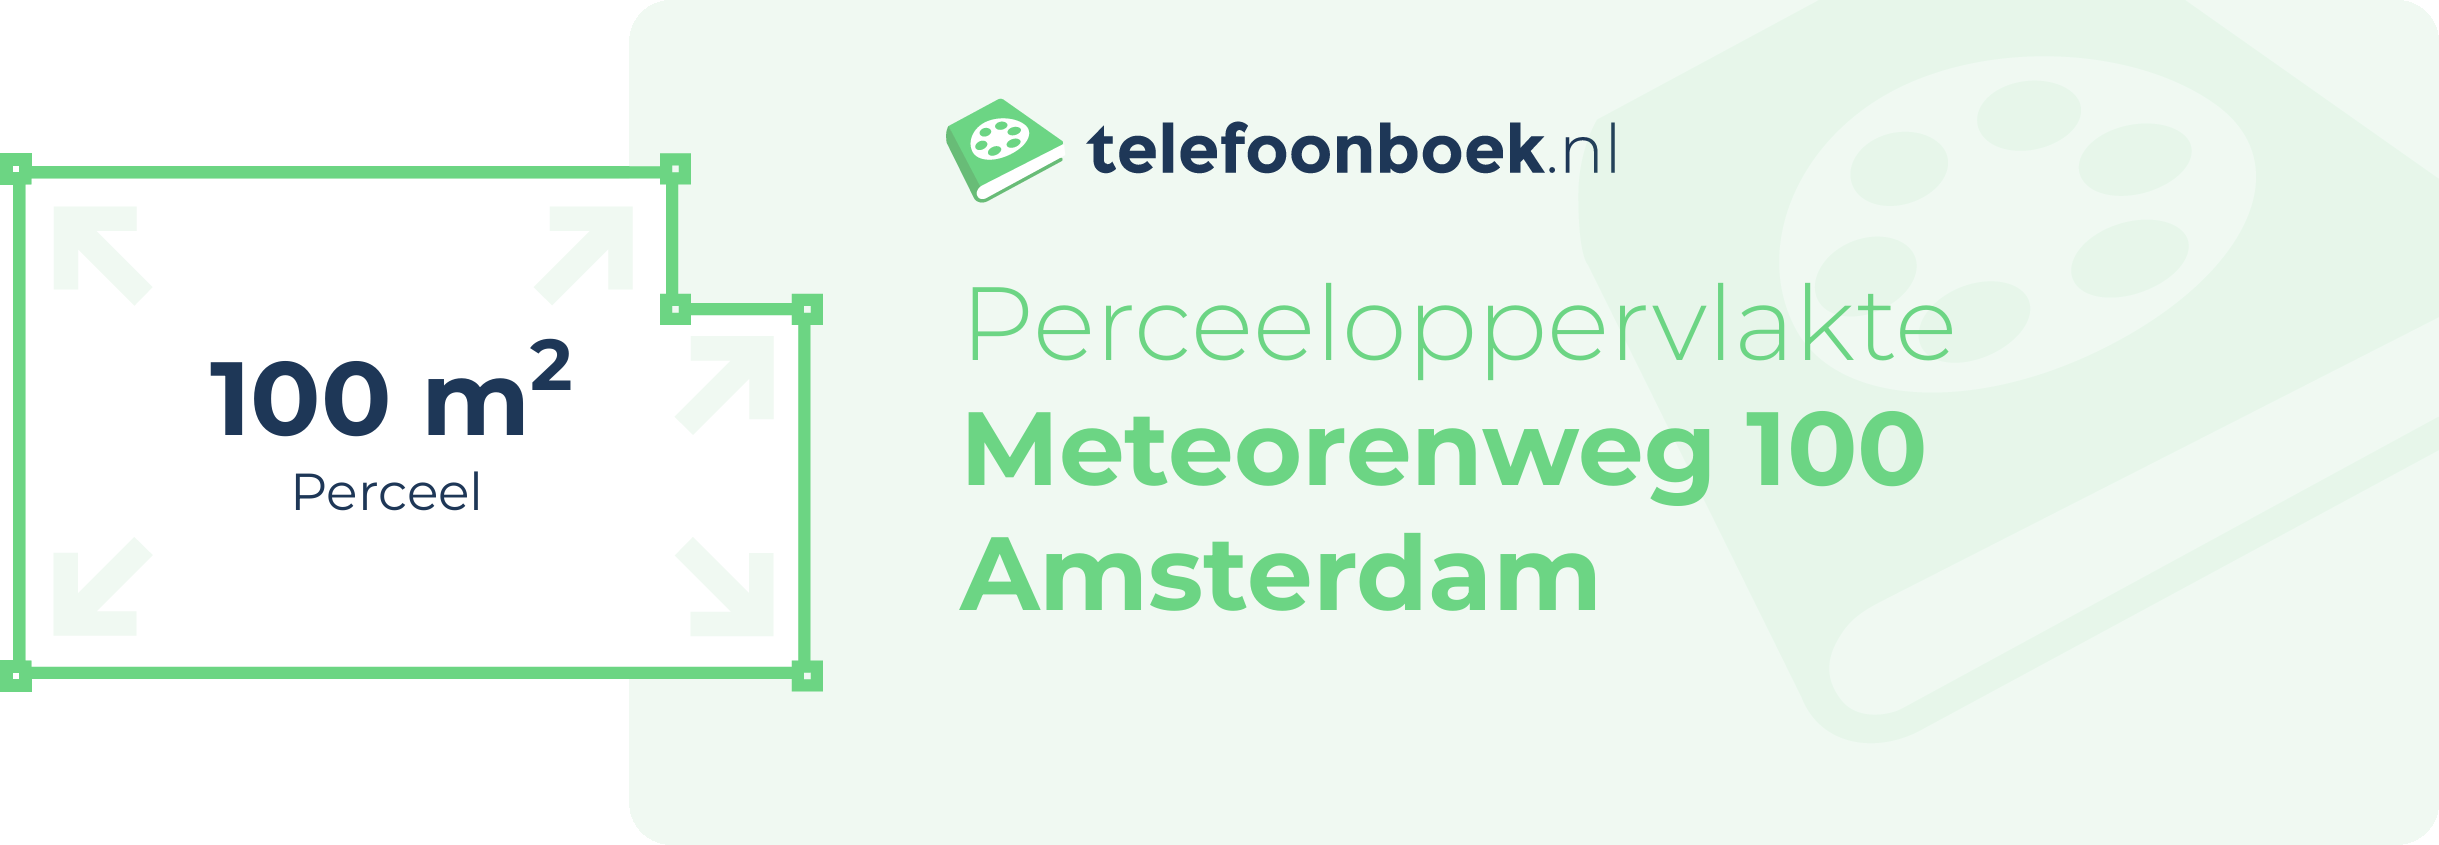 Perceeloppervlakte Meteorenweg 100 Amsterdam